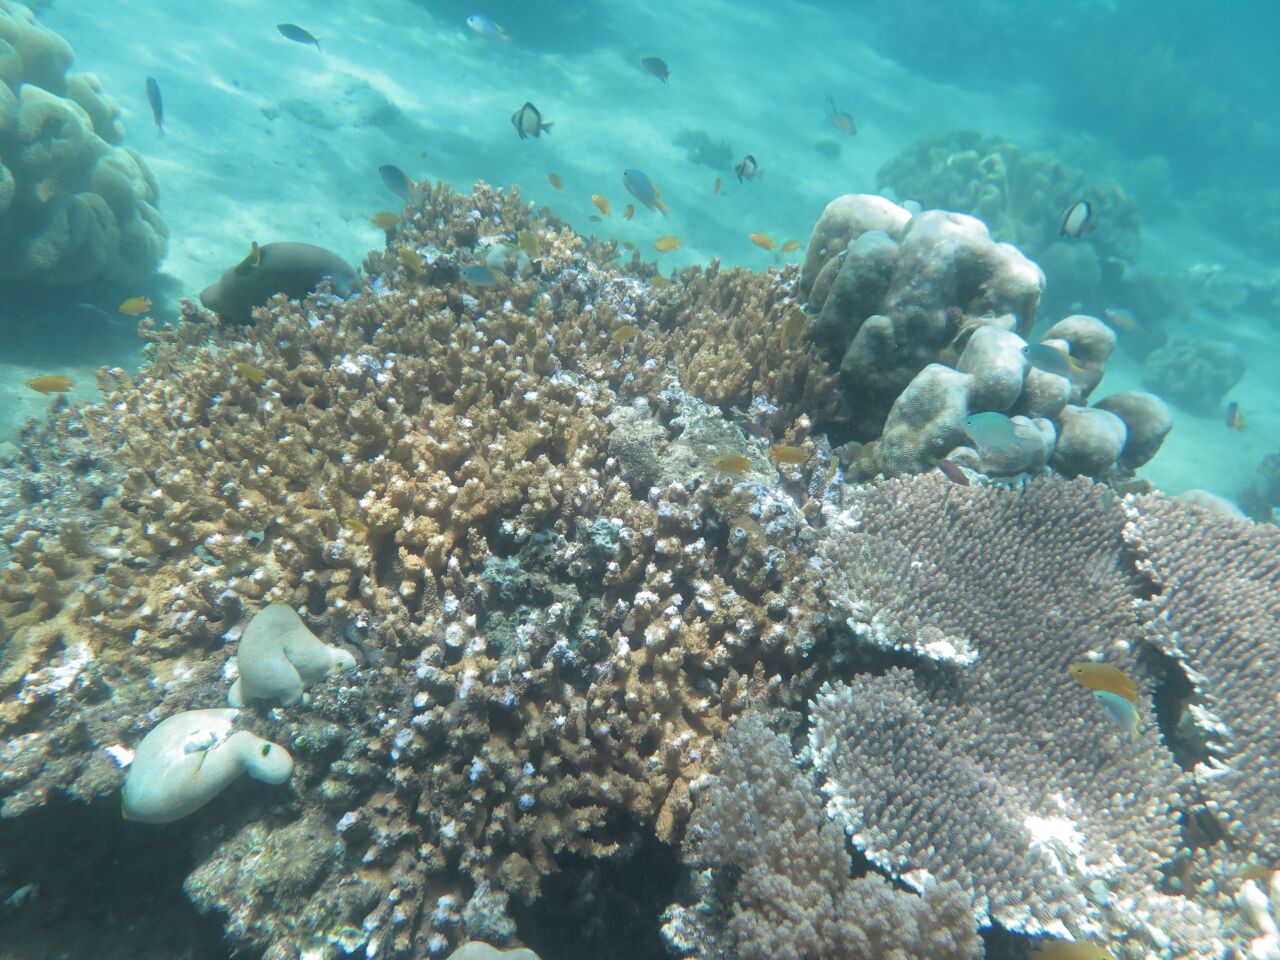 Salah satu spot keindahan bawah air di pesisir Pantai Bangsring, Kecamatan Wongsorejo, Banyuwangi, Jawa Timur. Ribuan jenis ikan dan terumbu karang menjadi daya tarik wisata Pantai Bangsring ini.  Foto : M Ambari